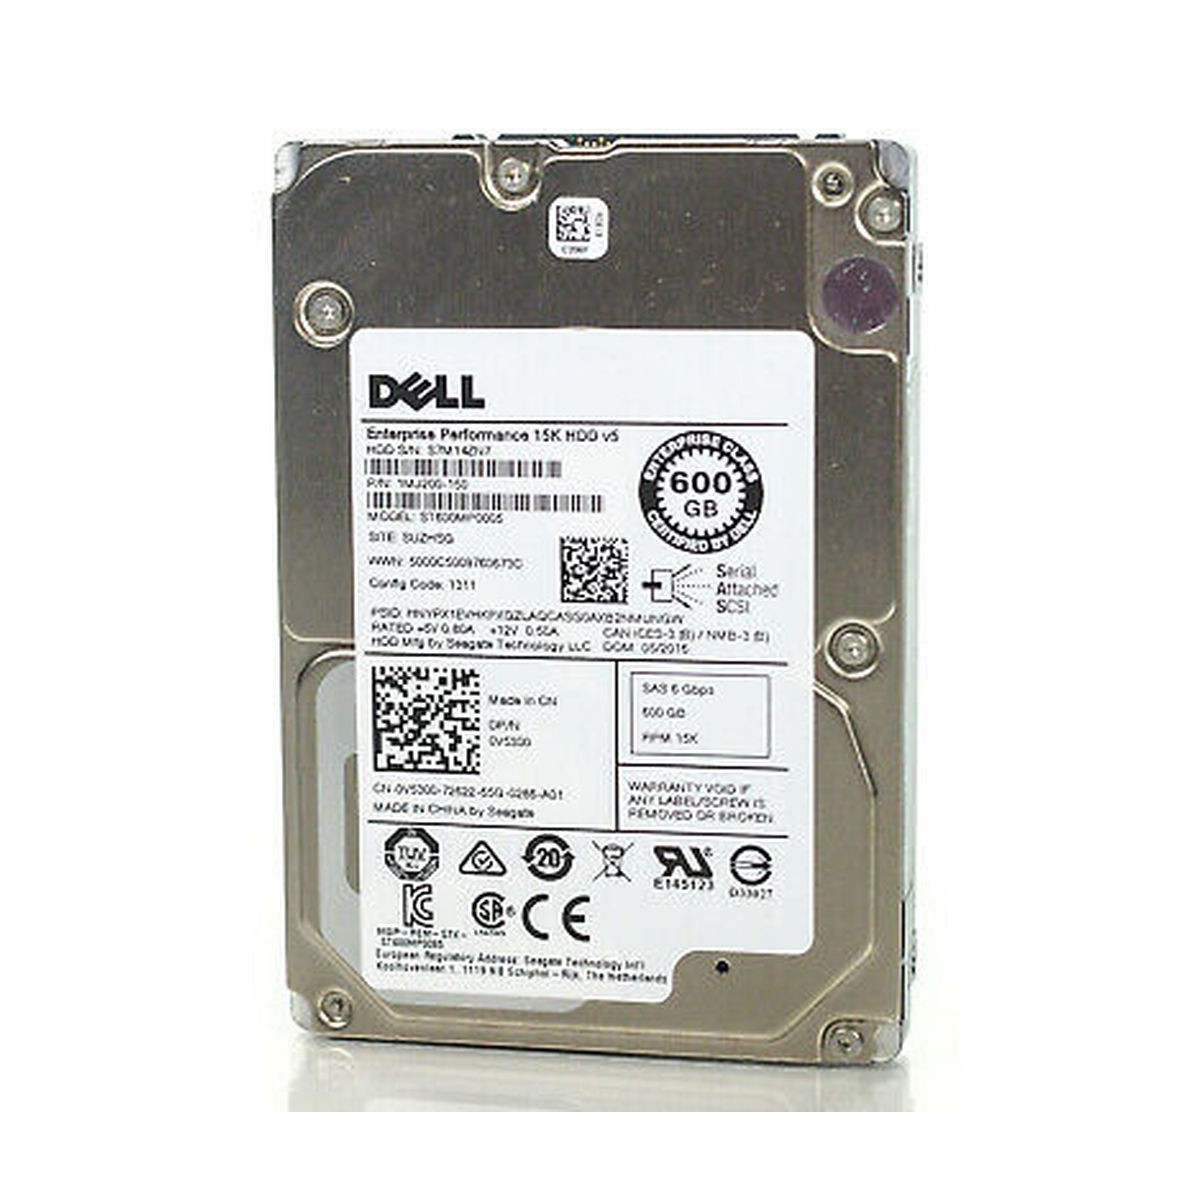 DELL ENTERPRISE 15K HDD v5 600GB SAS 2,5 0V5300